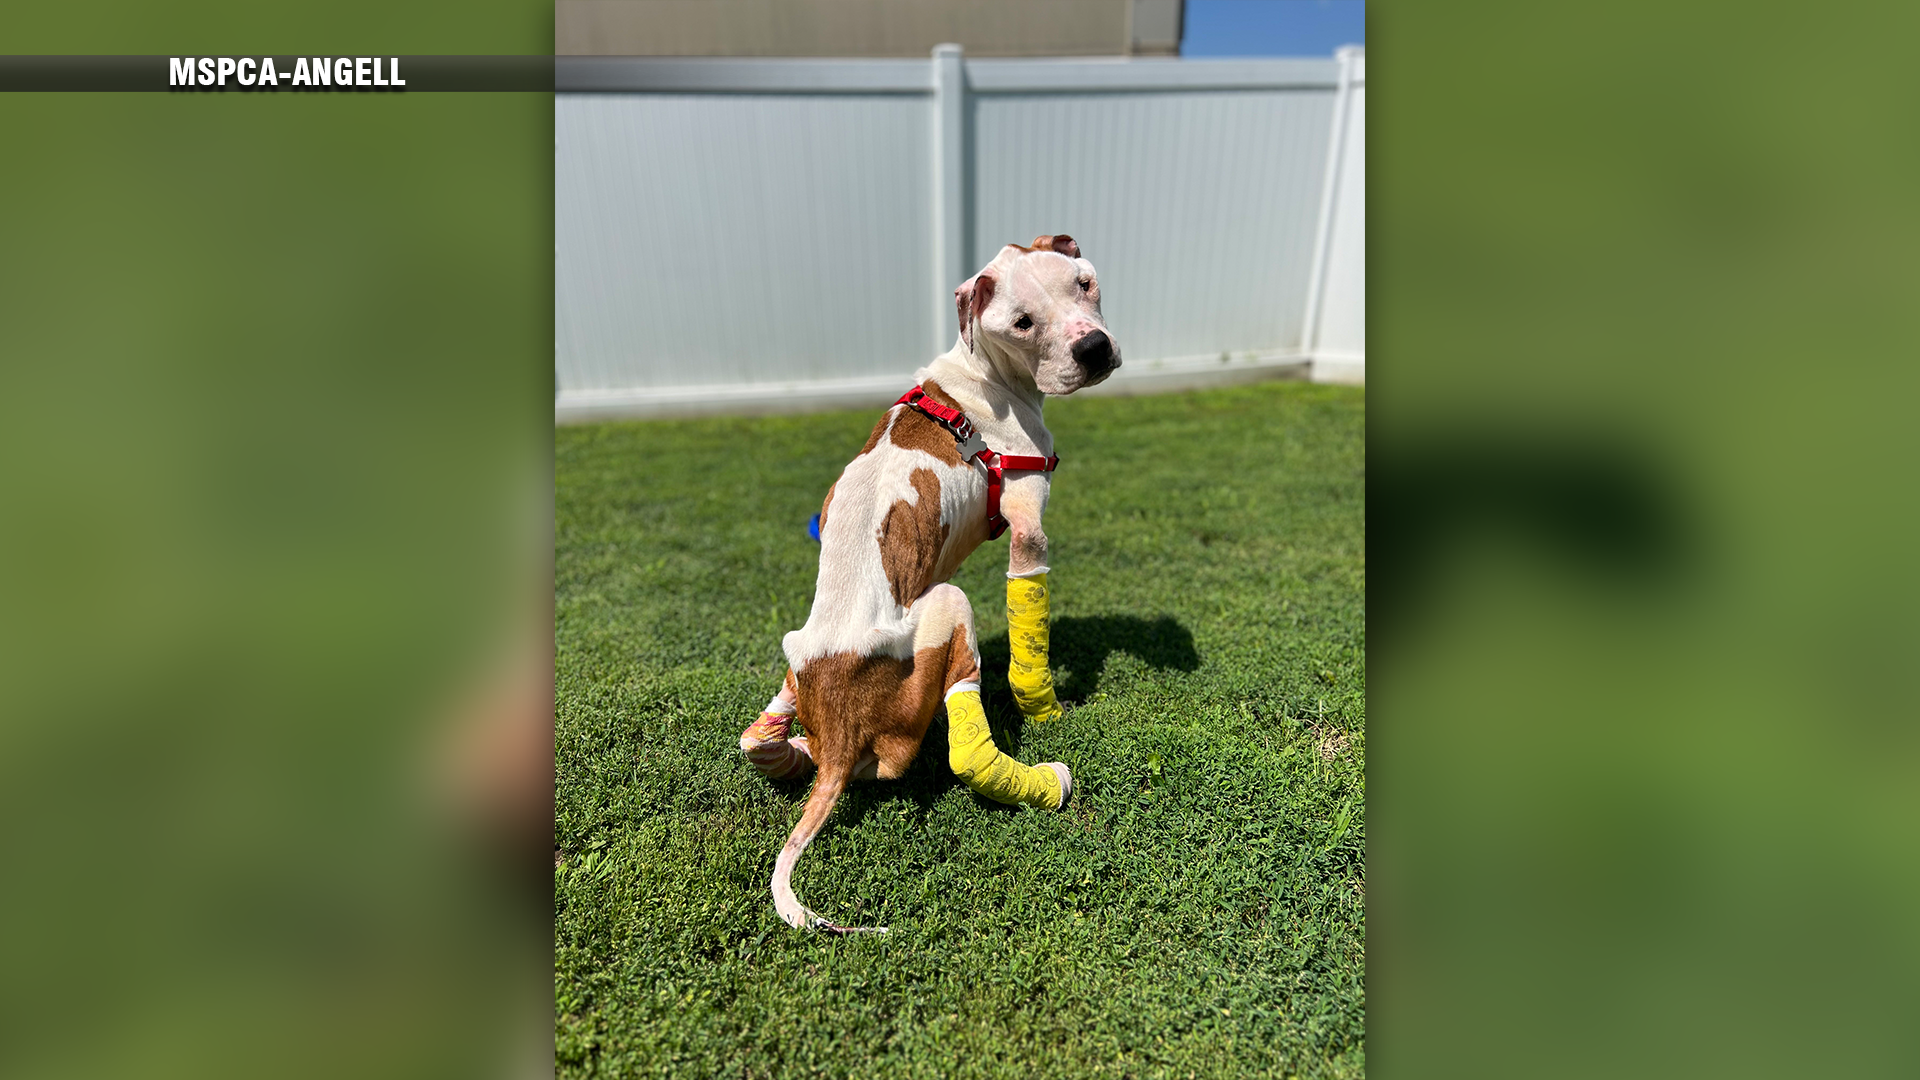 Emaciated' dog rescued near U.S. 35 in Wayne County